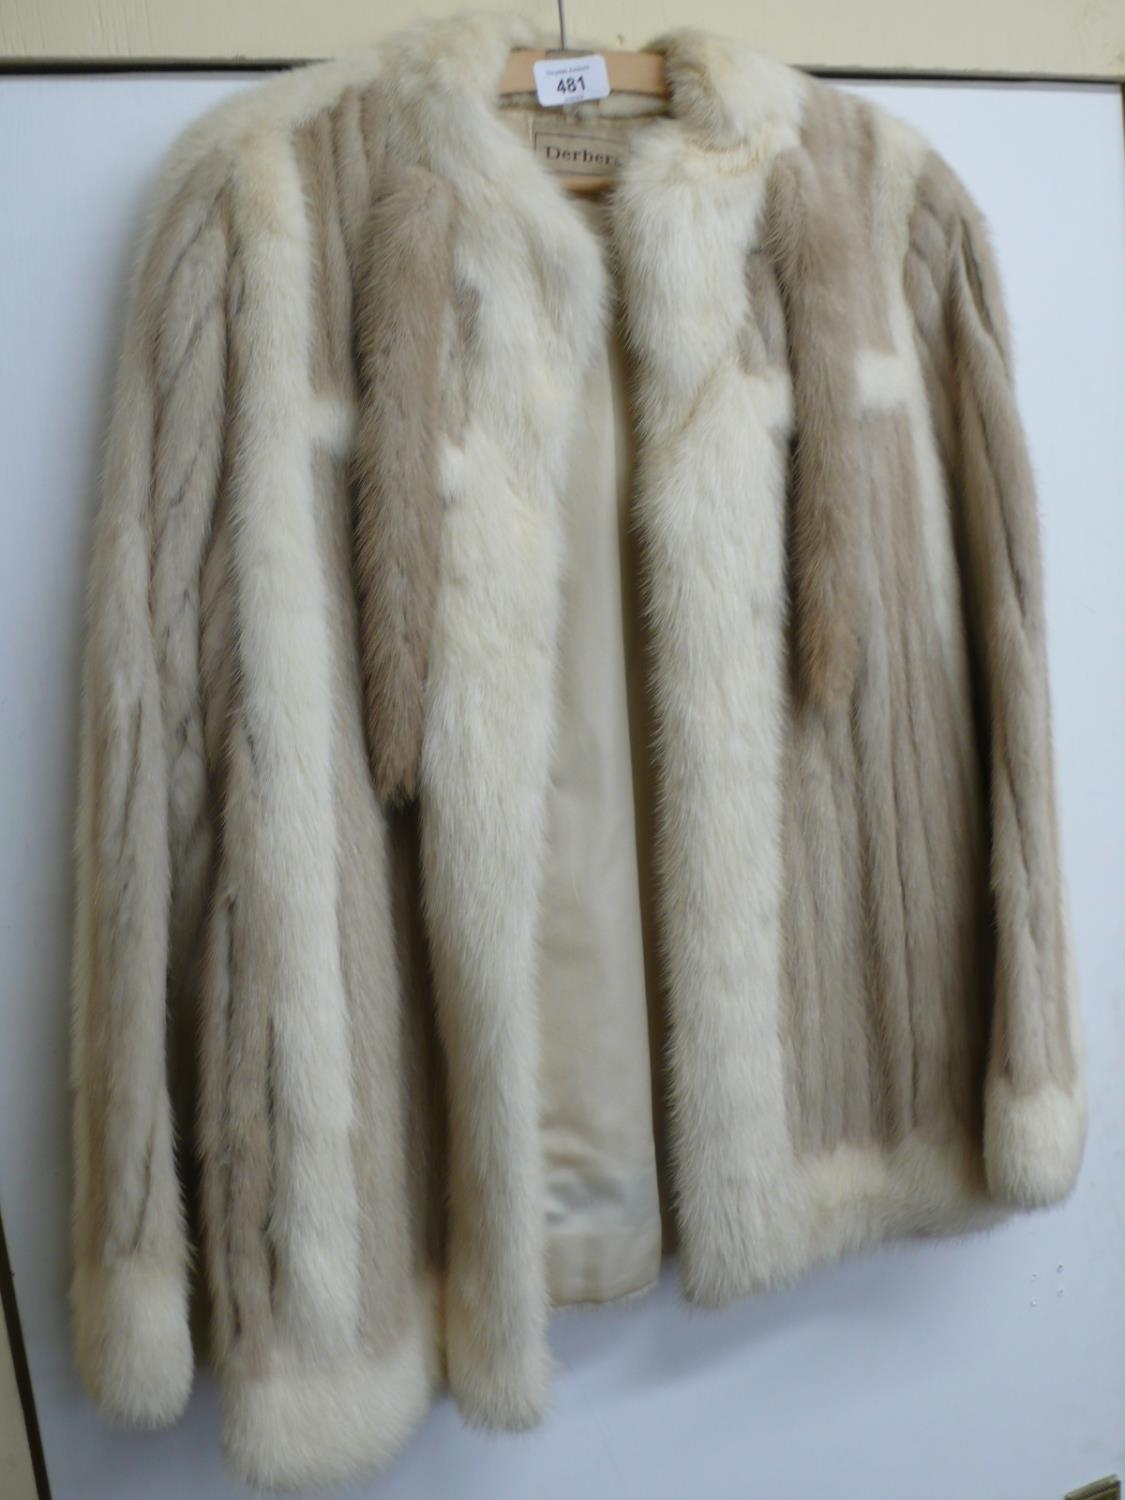 Striped Derber mink jacket, white and pale brown fur, medium